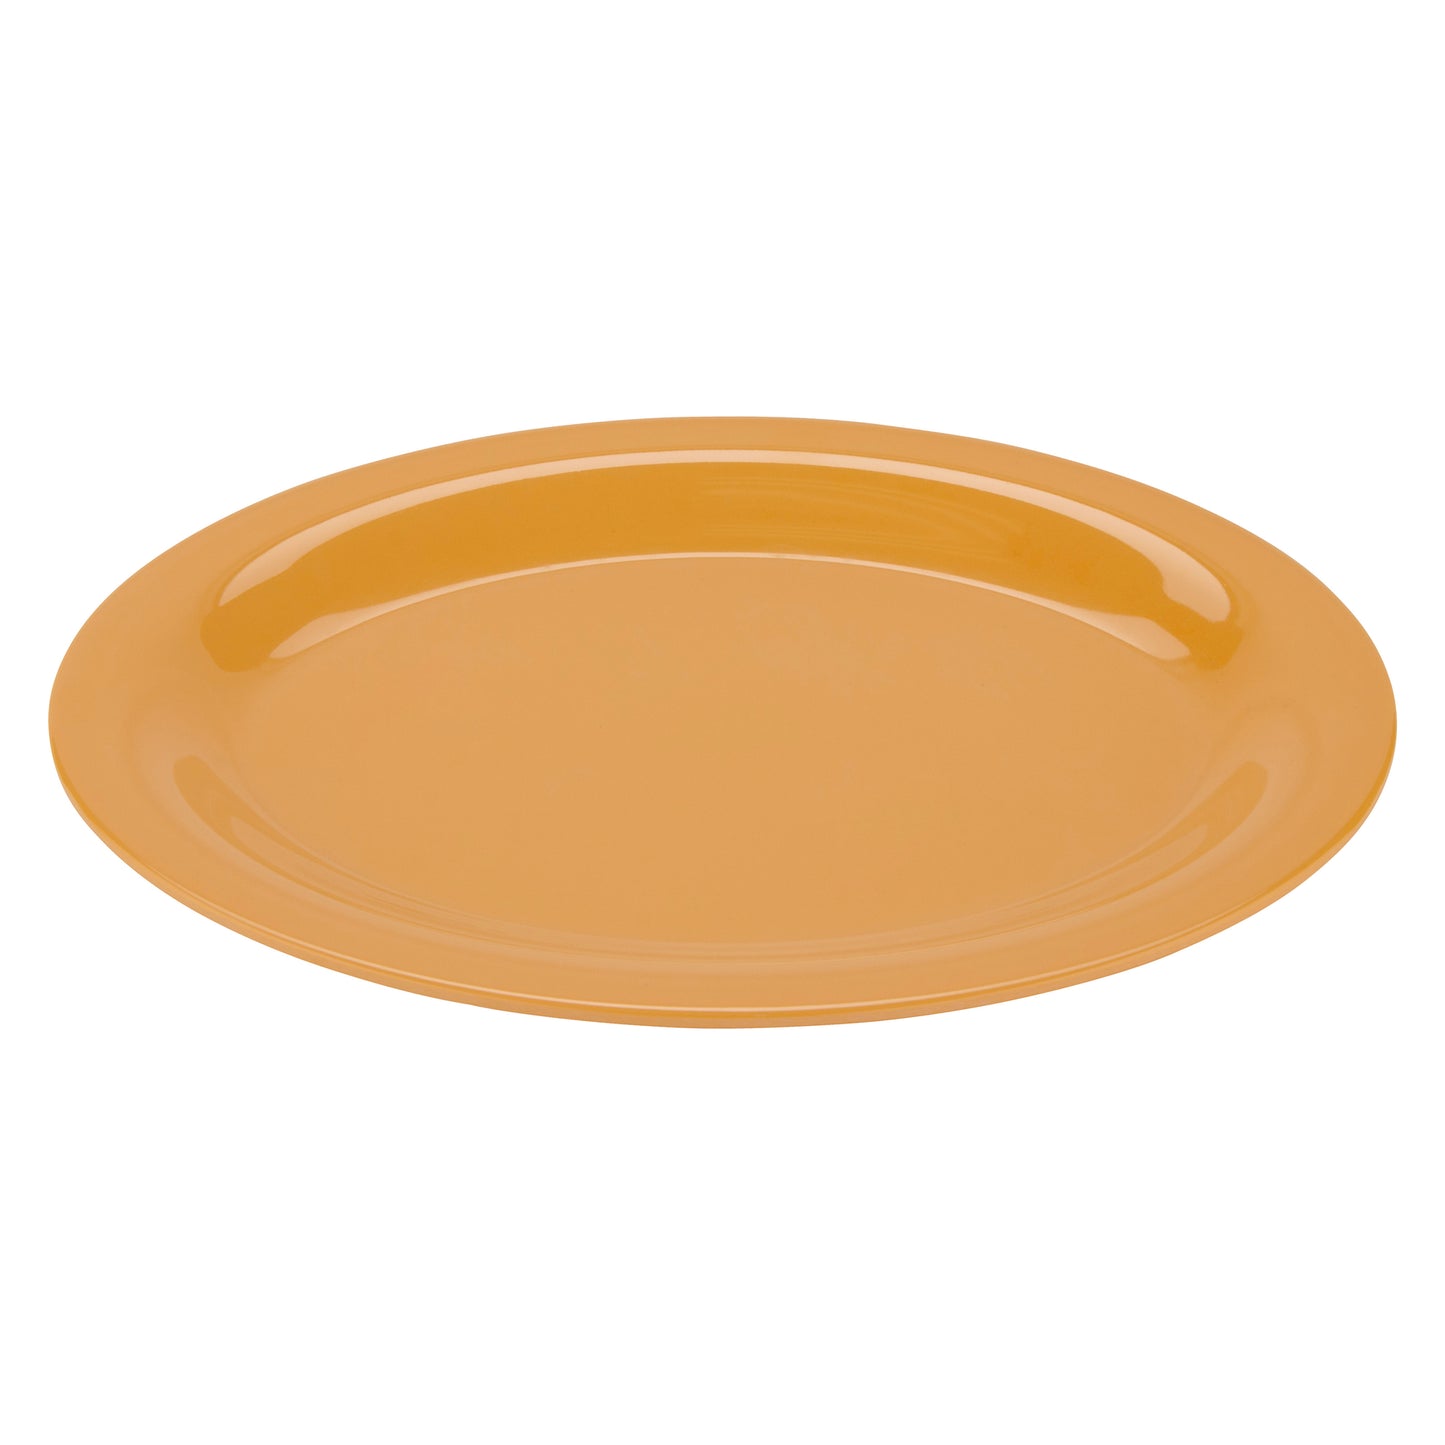 13.5" x 10.25" Oval Platter (12 Pack)